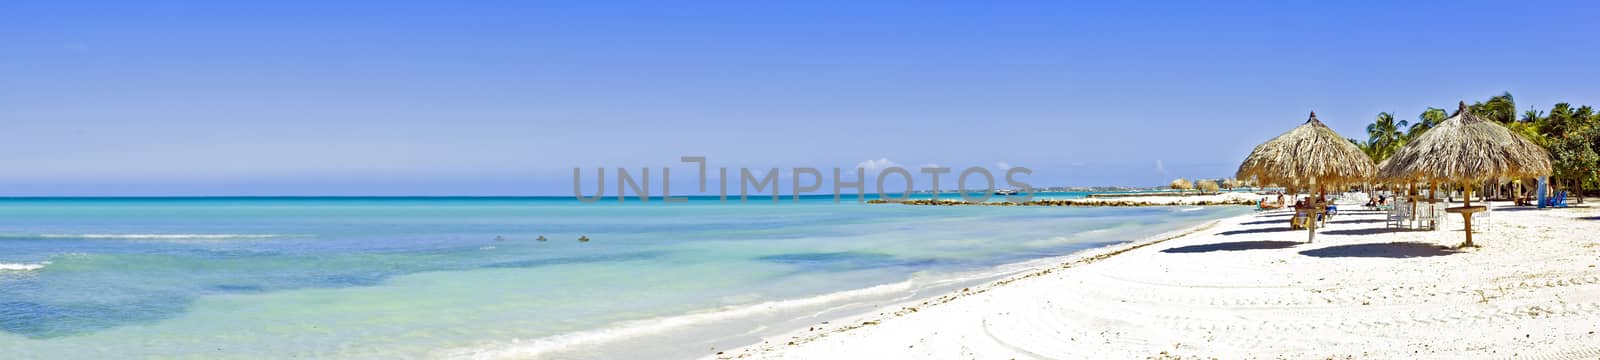 Panorama from Palm beach on Aruba island by devy